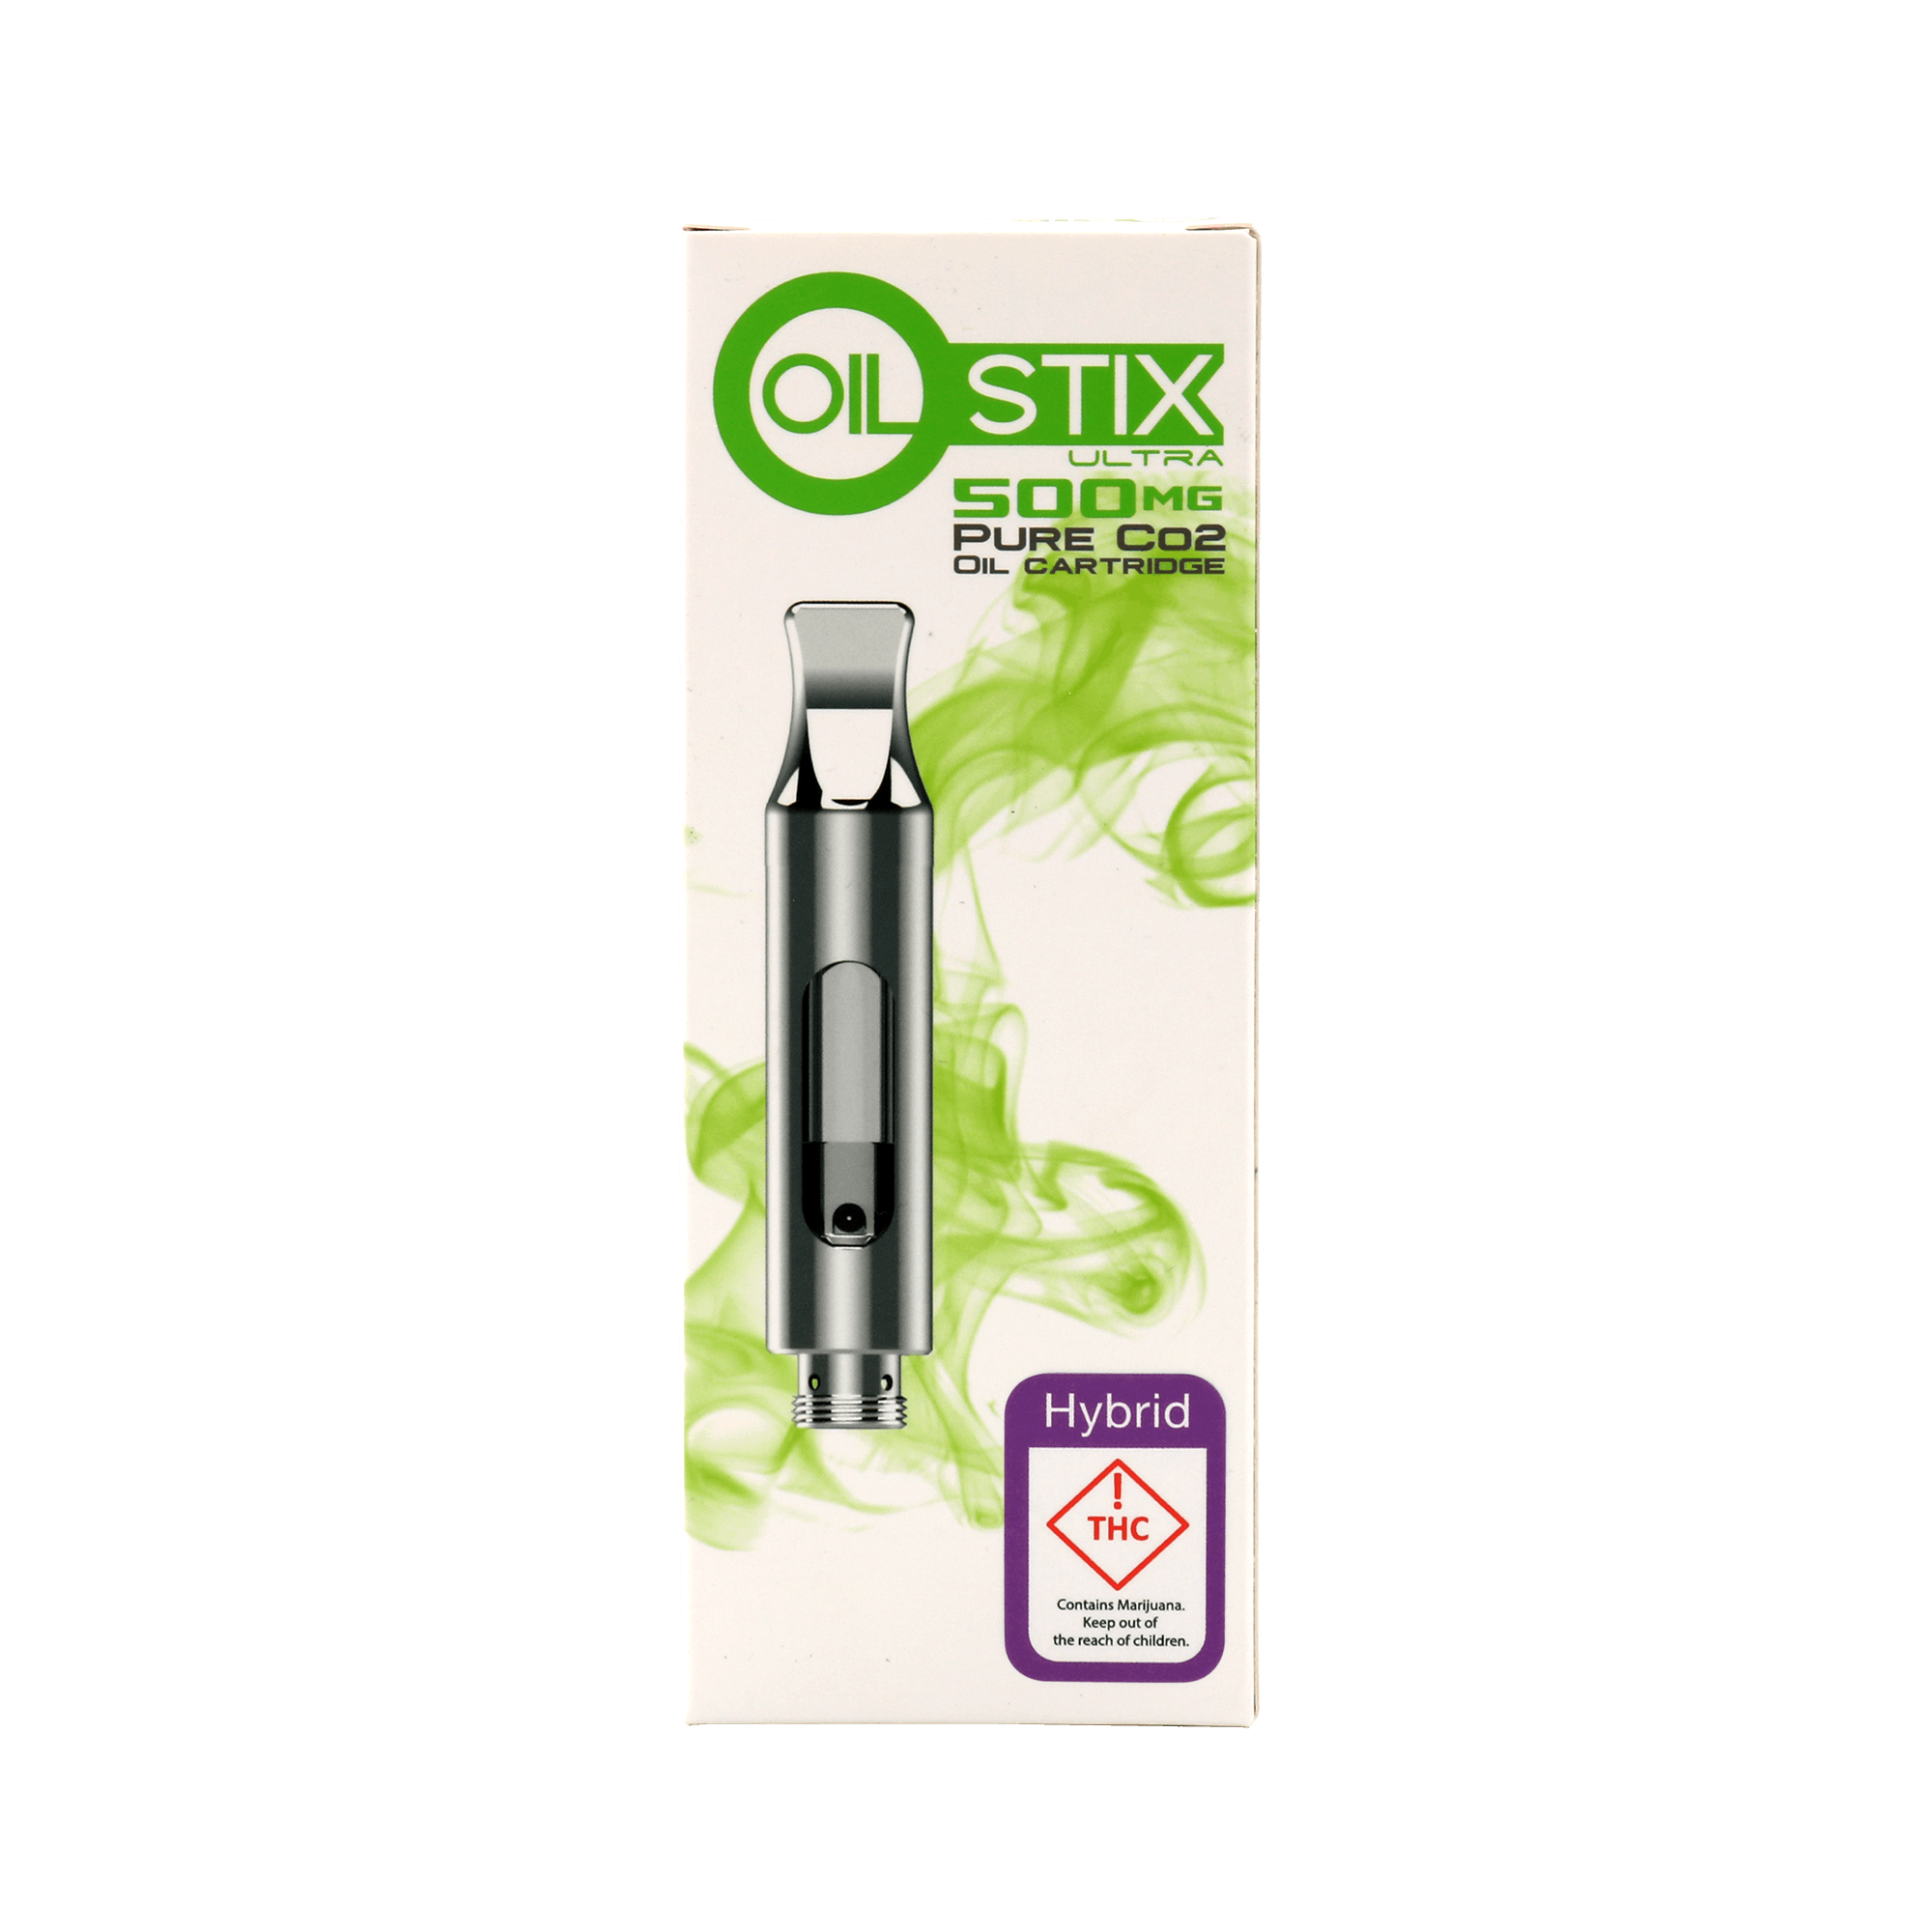 Oil Stix Ultra - Hybrid - Cartridge